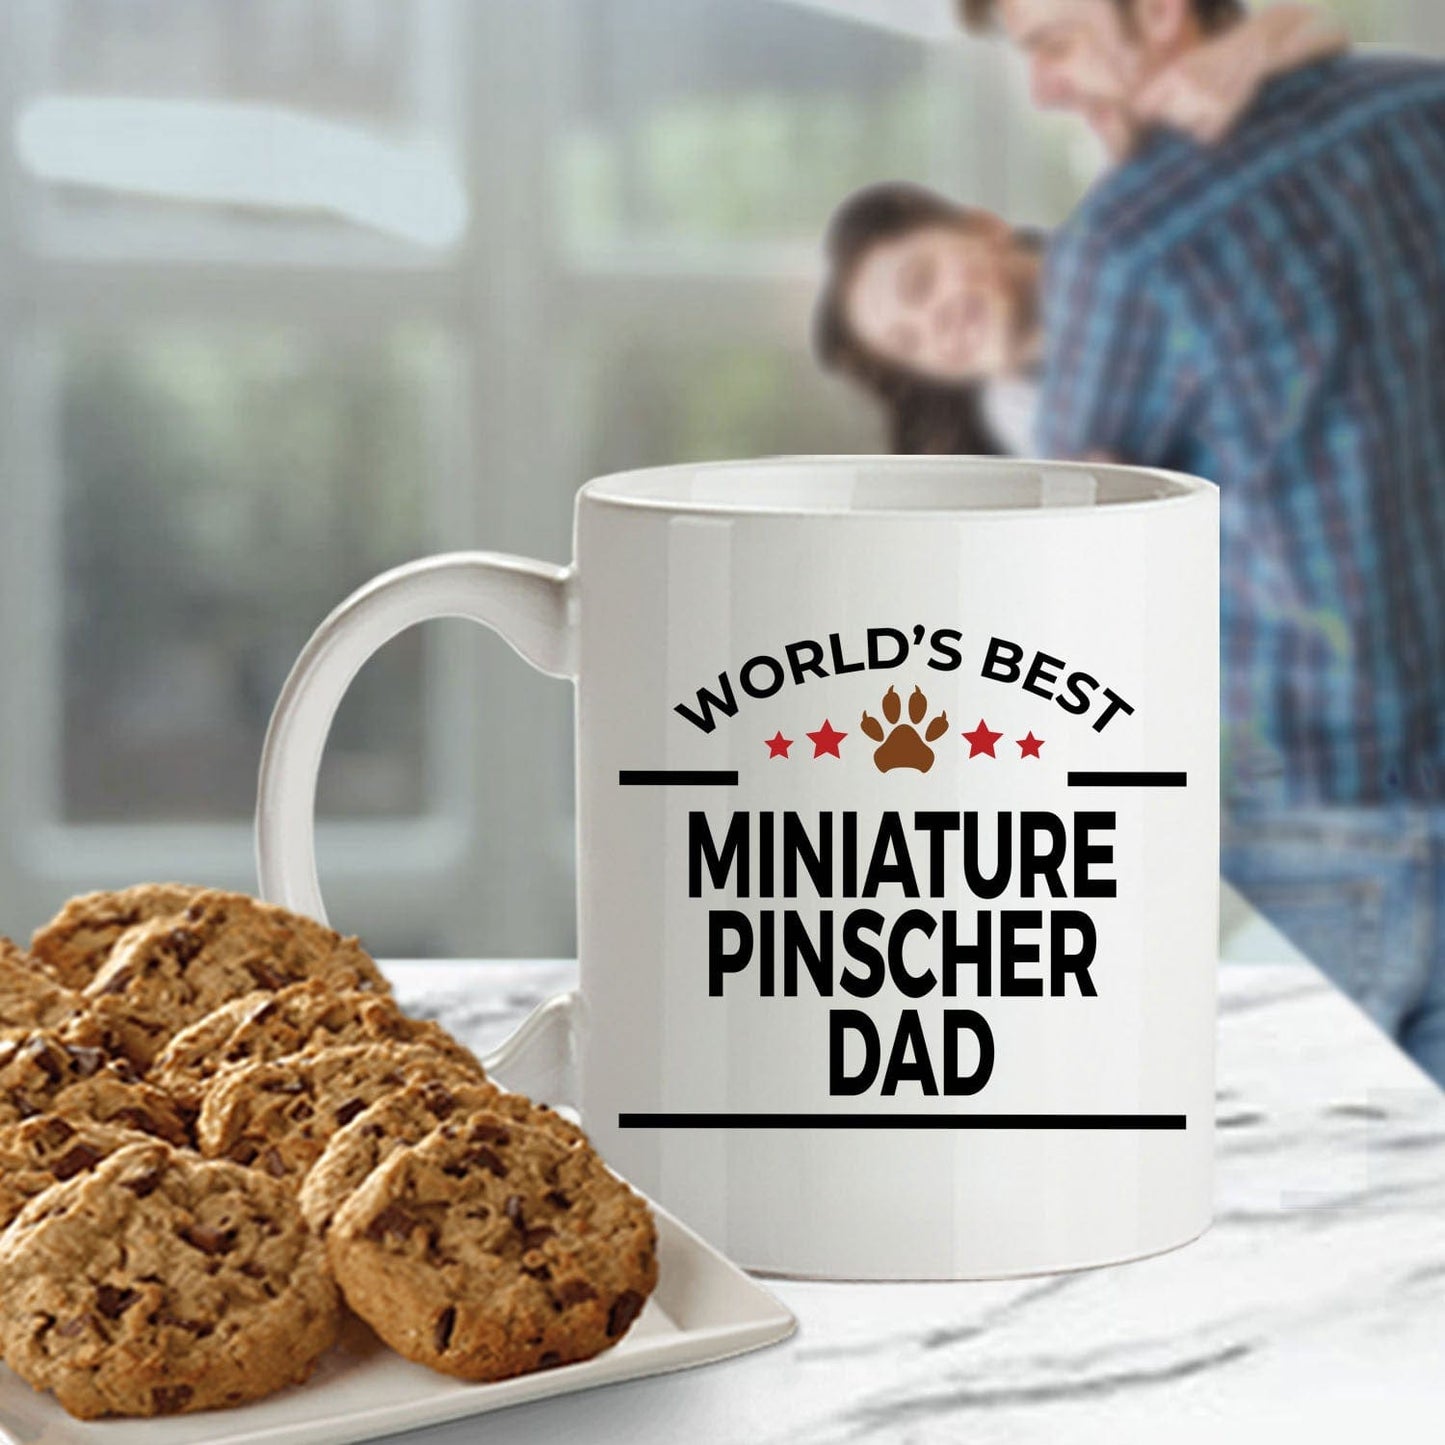 Miniature Pinscher Dog Dad Coffee Mug